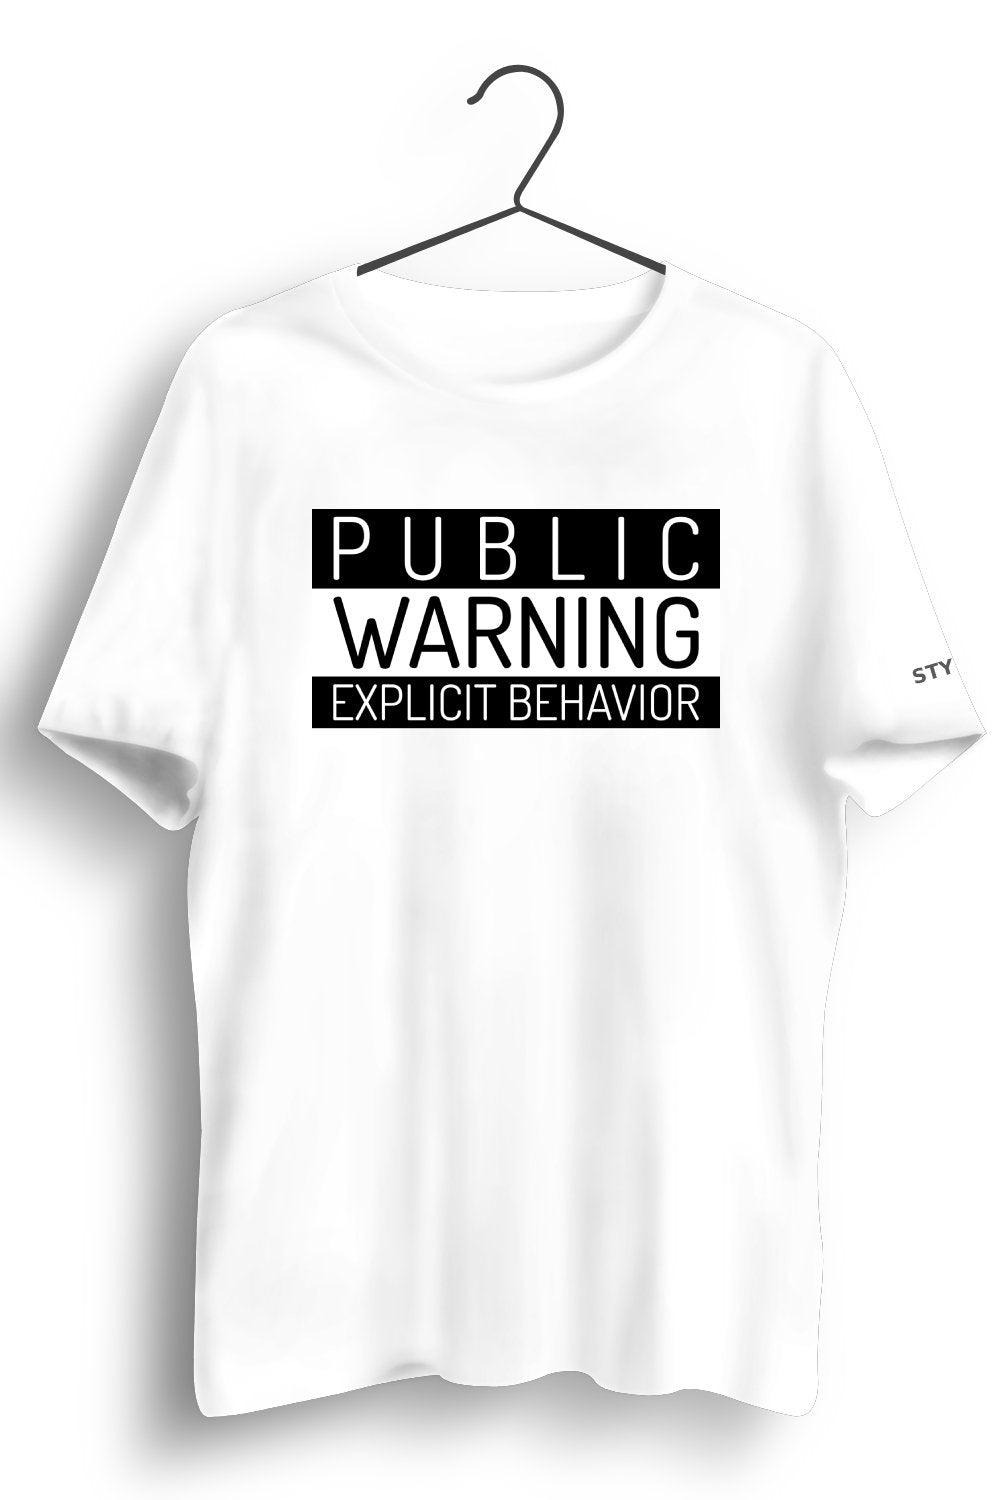 Explicit Graphic Printed White Tshirt